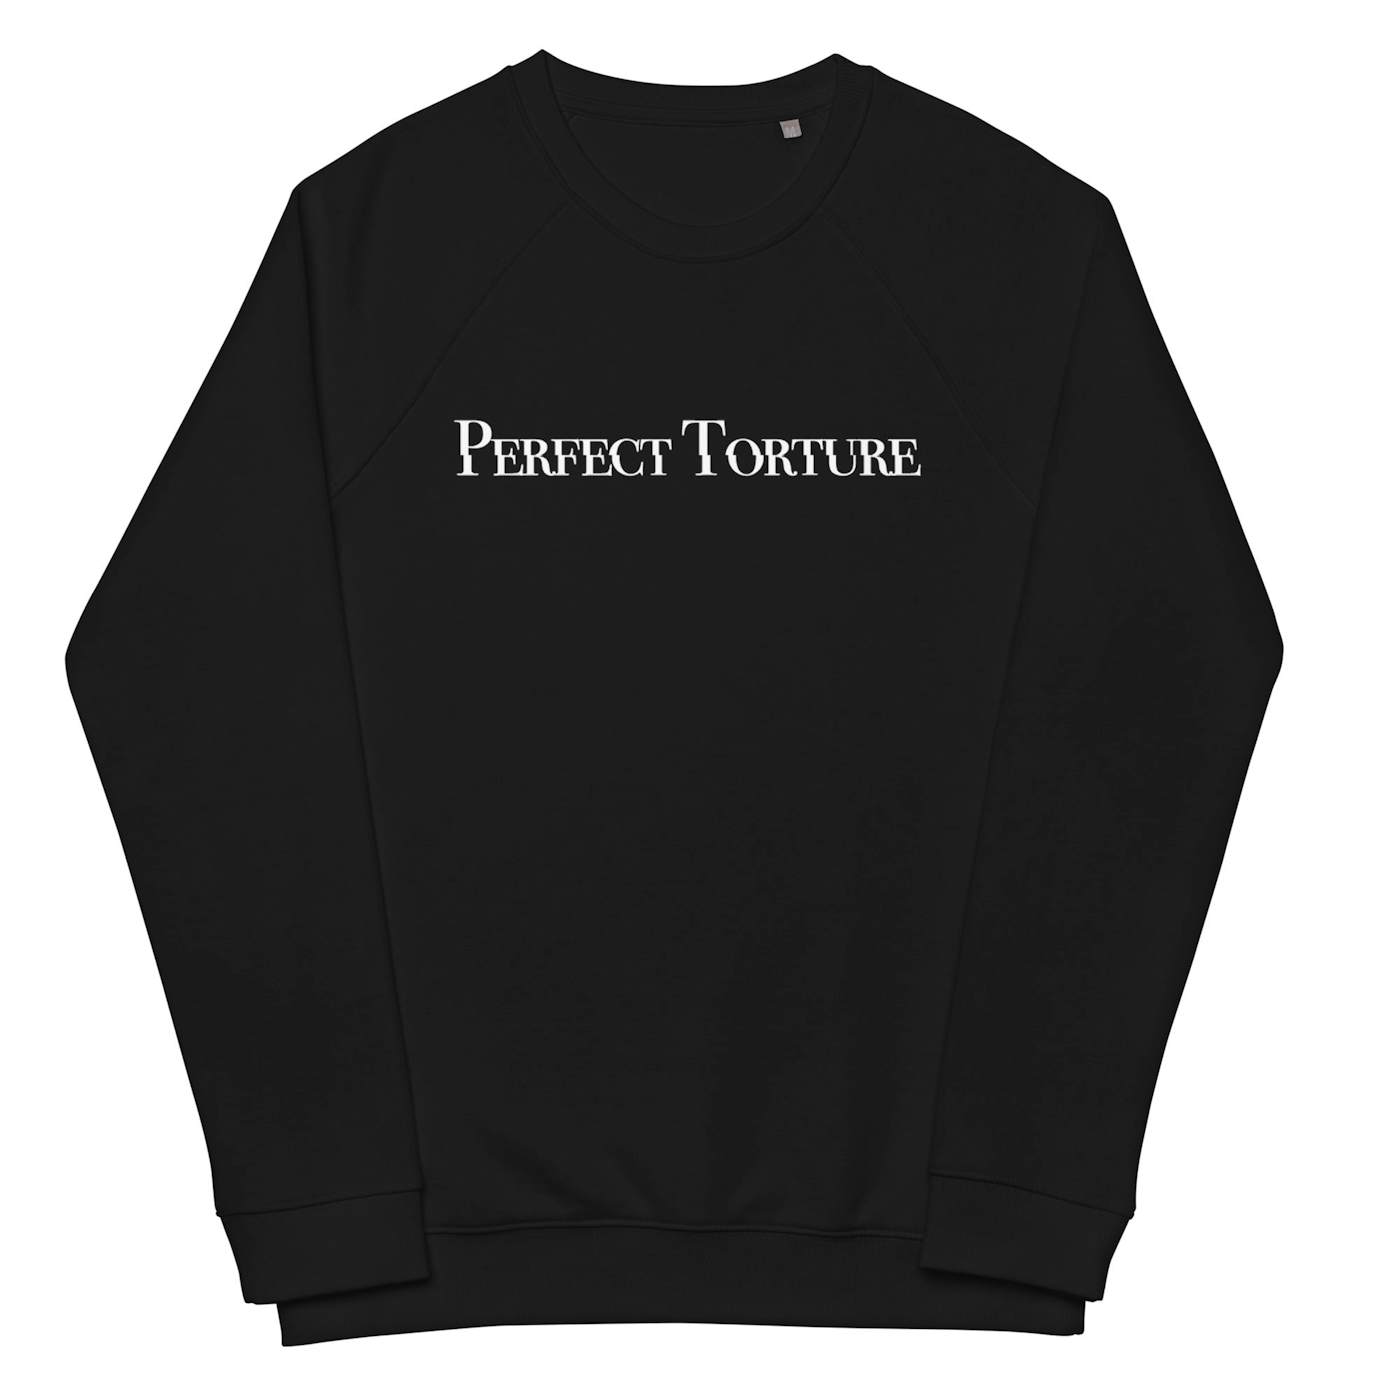 Black Smoke Trigger Perfect Torture Unisex Sweatshirt